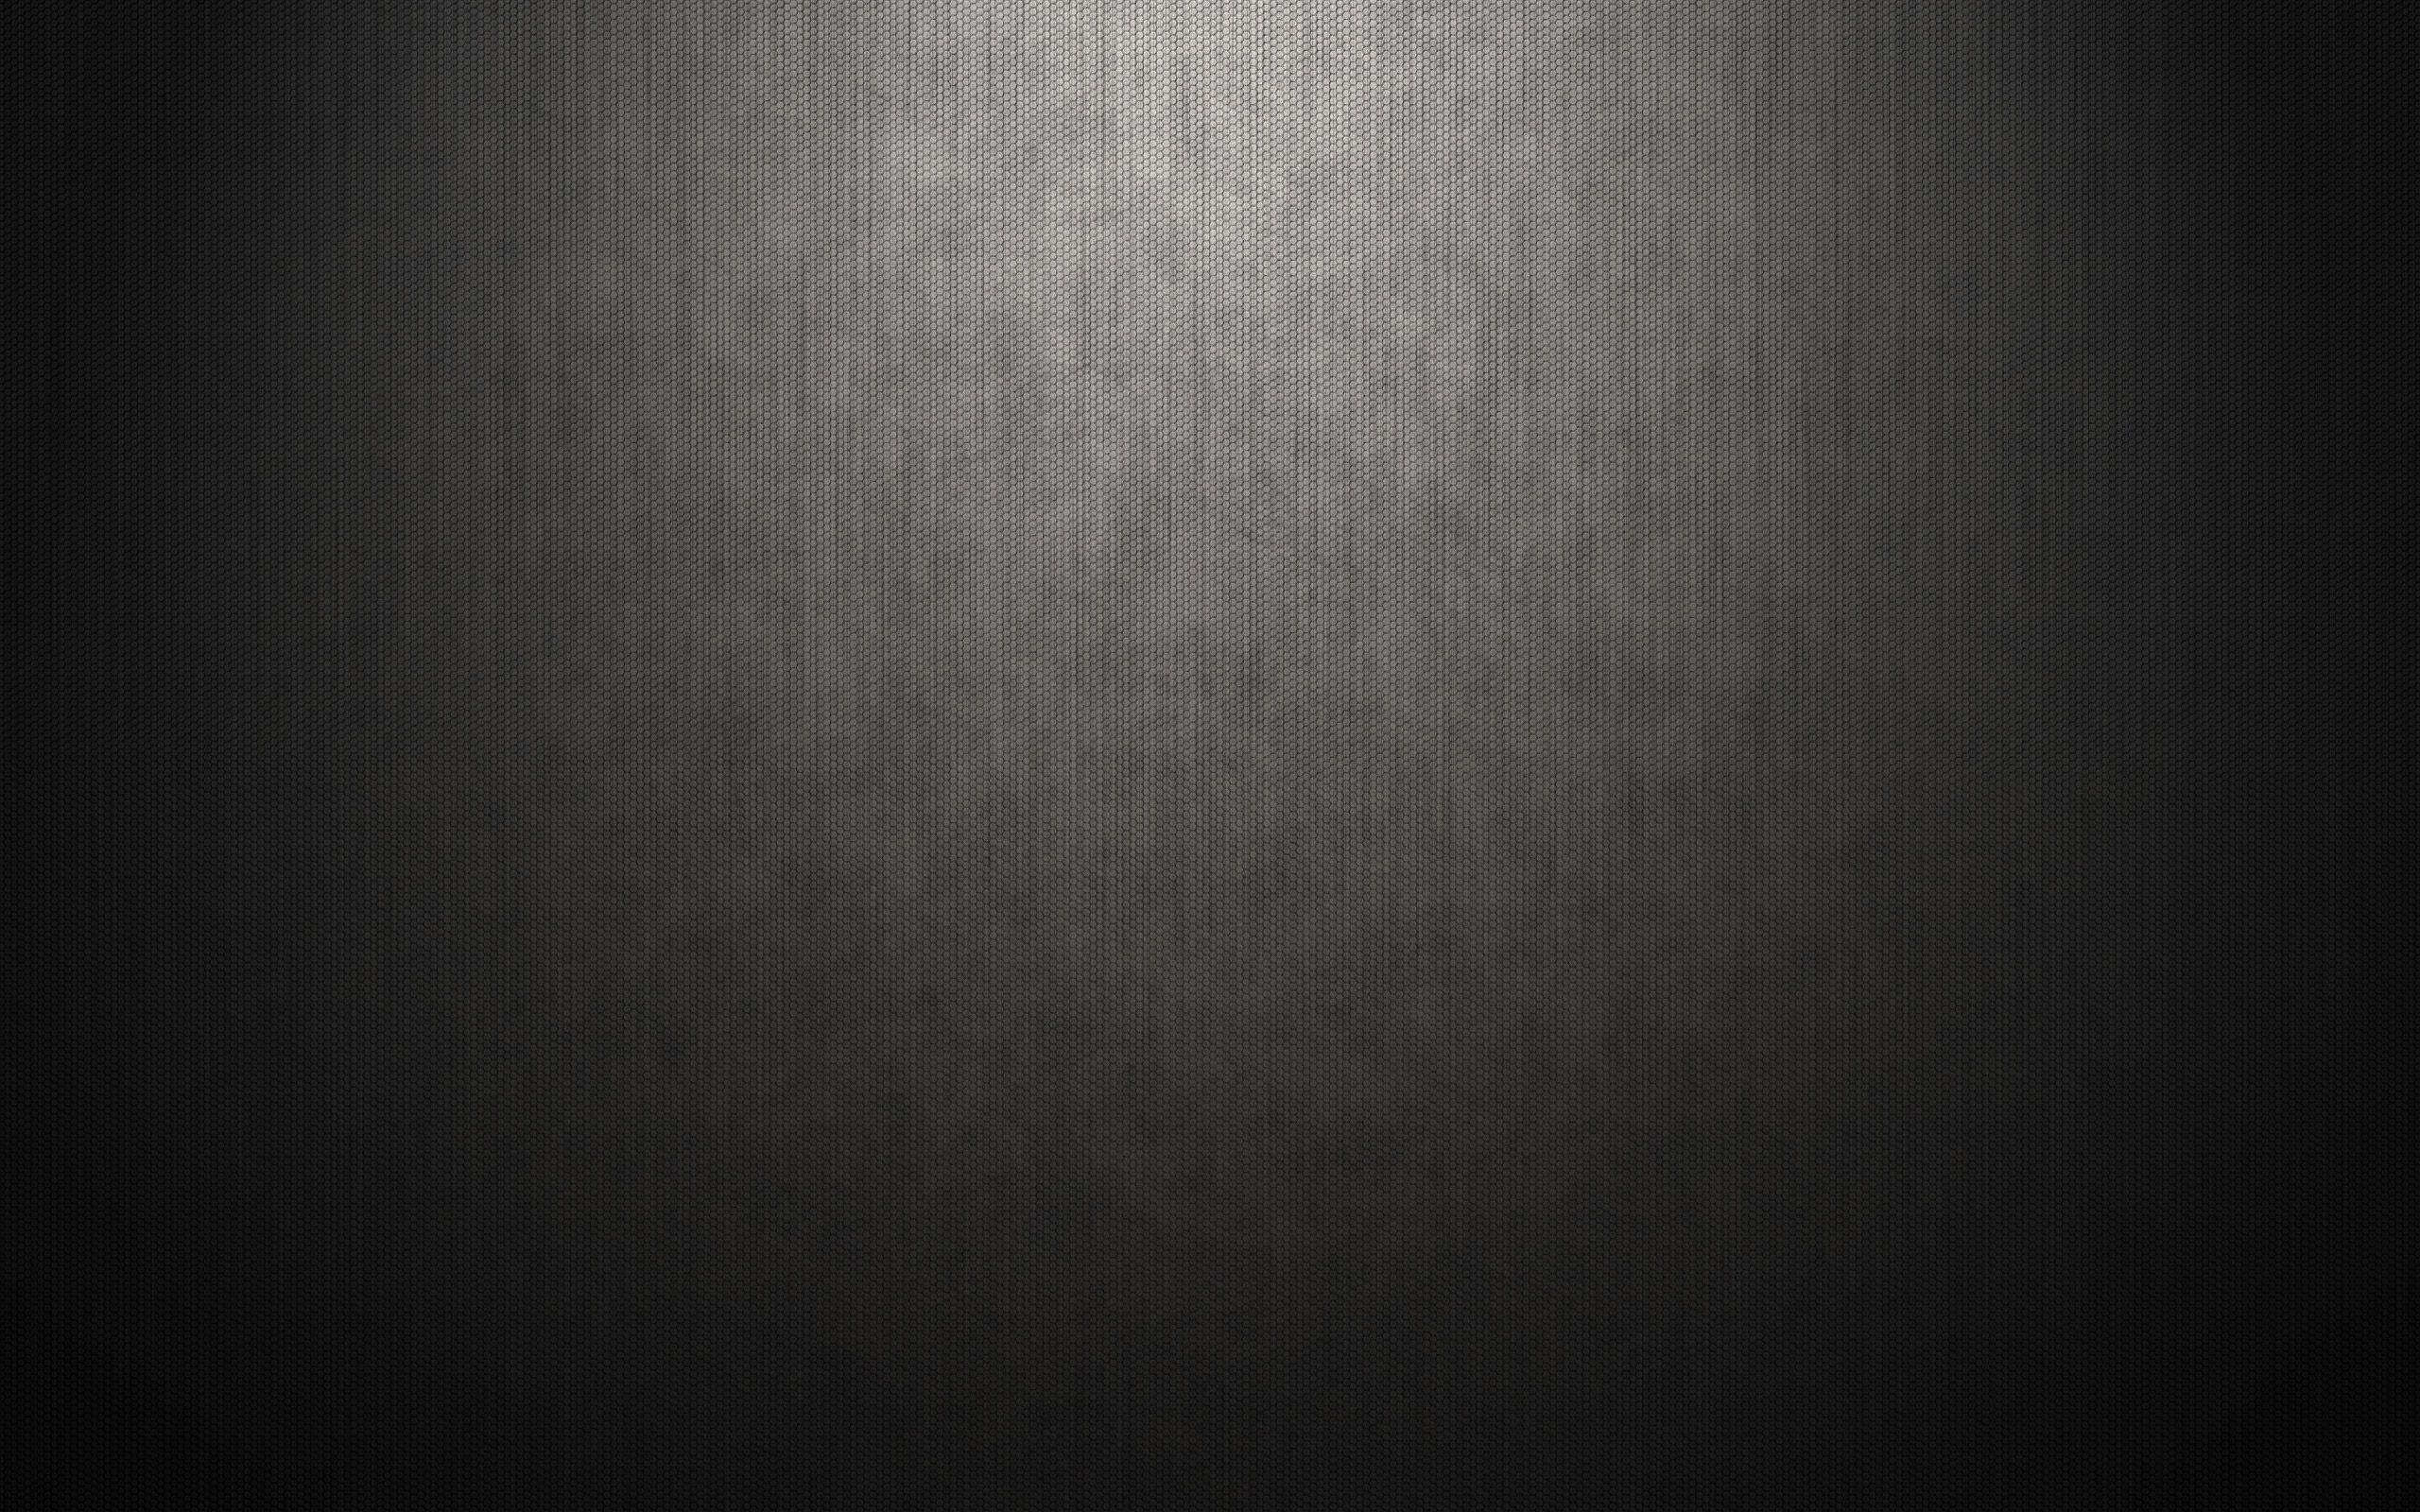 Gray Textured Wallpaper